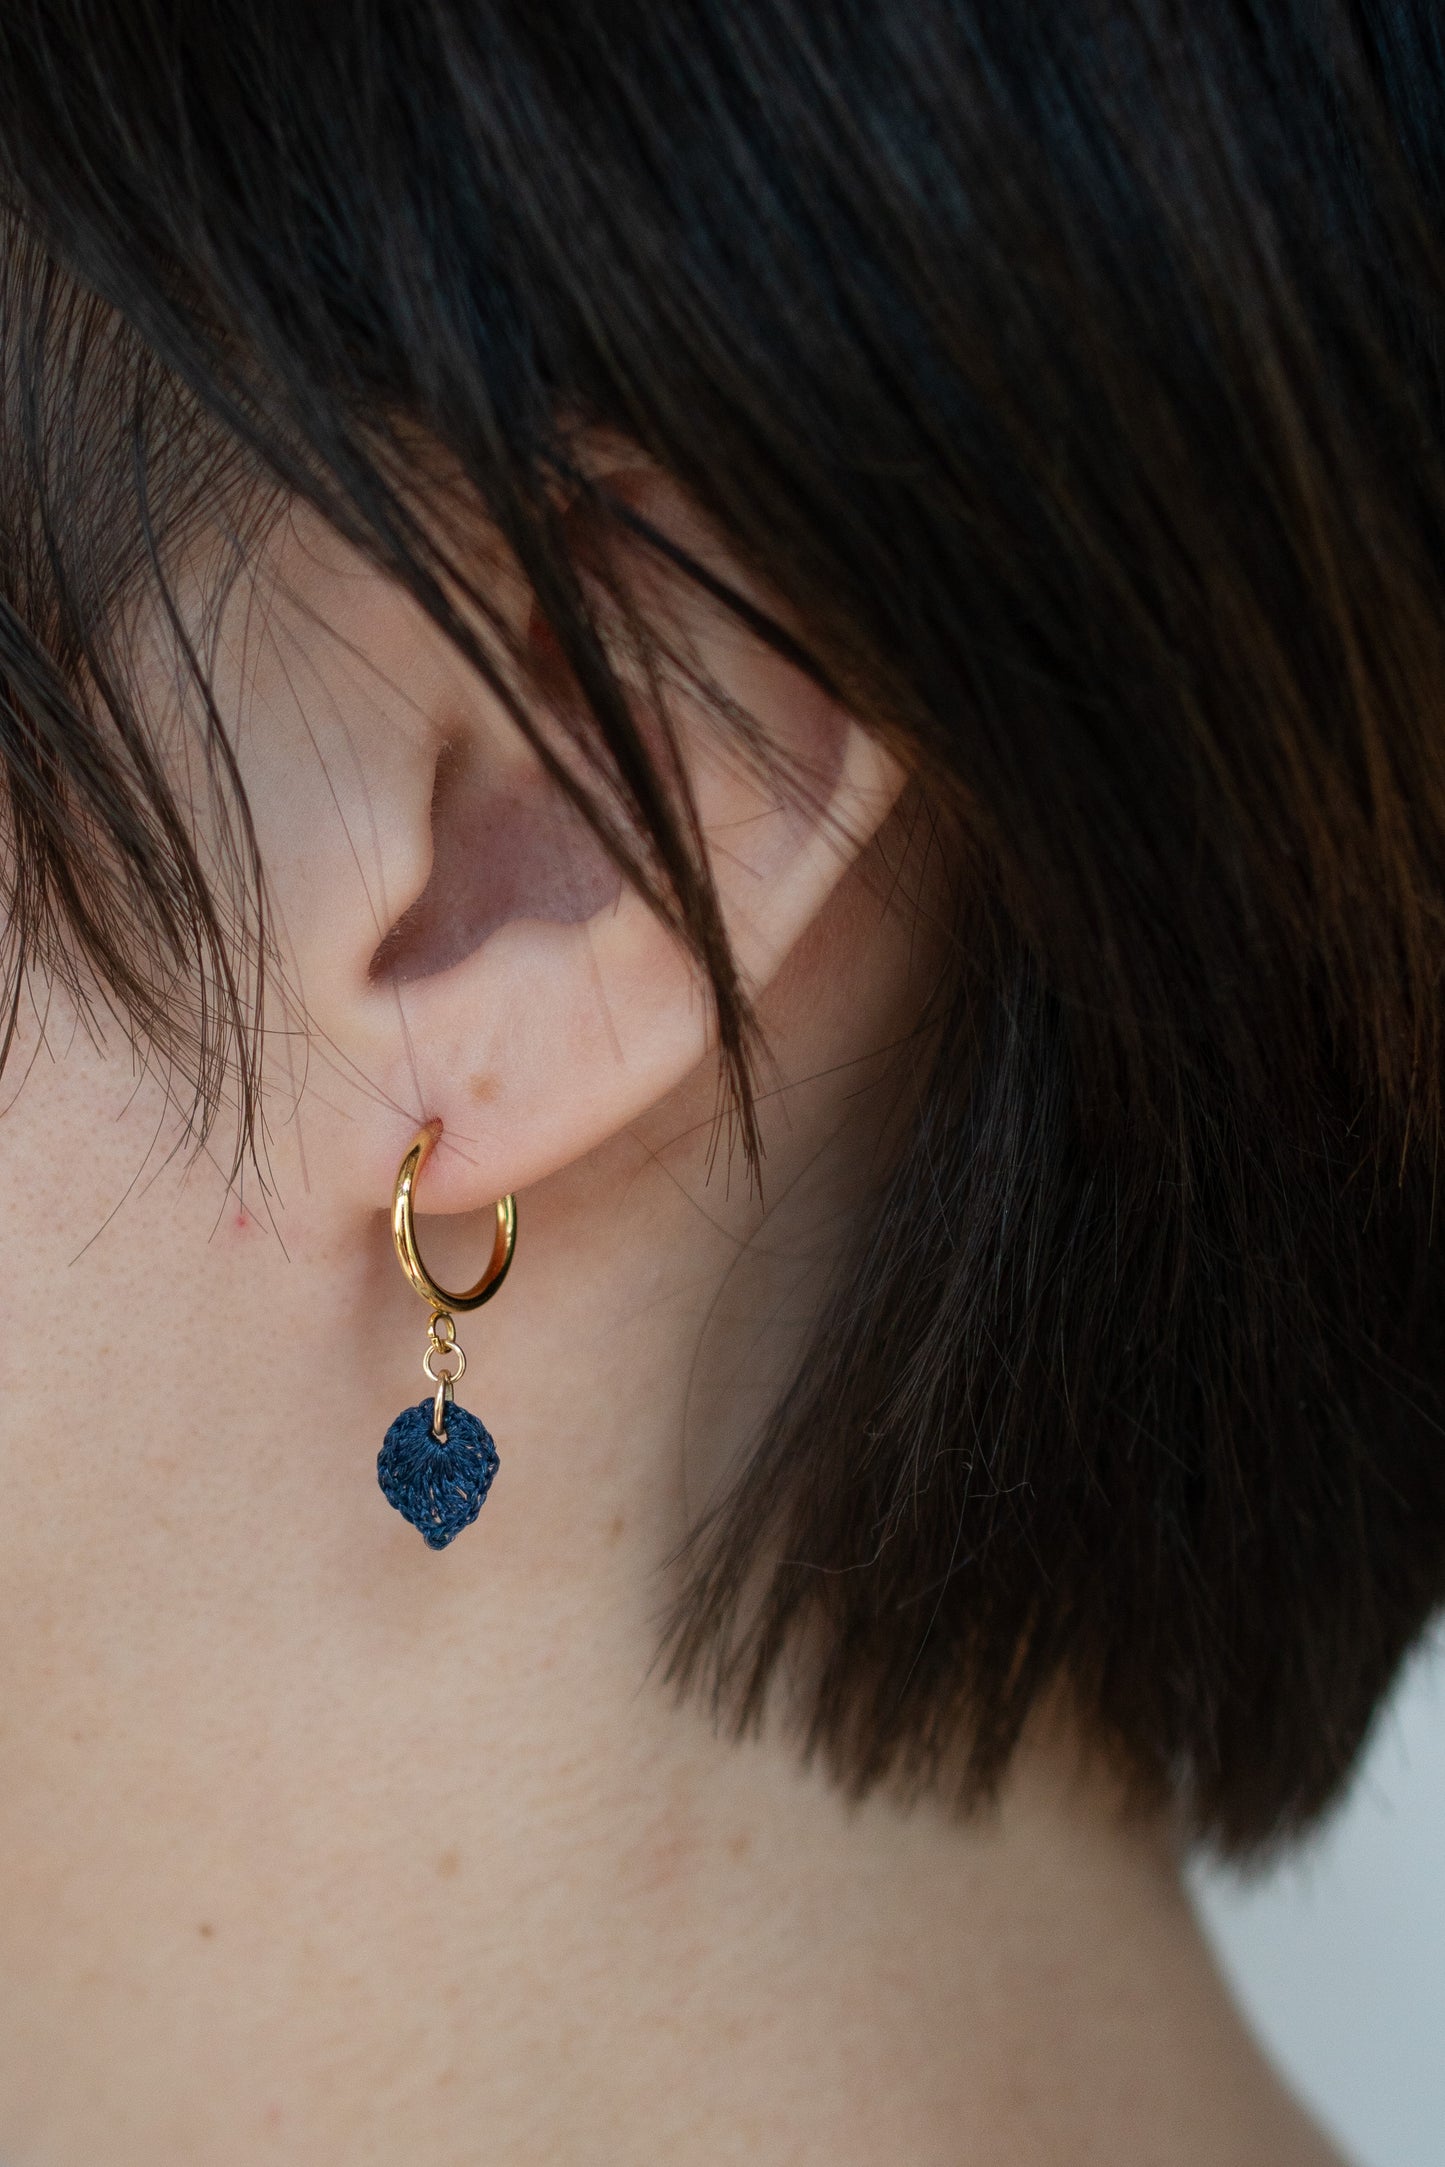 Ichiha's earring | Ai